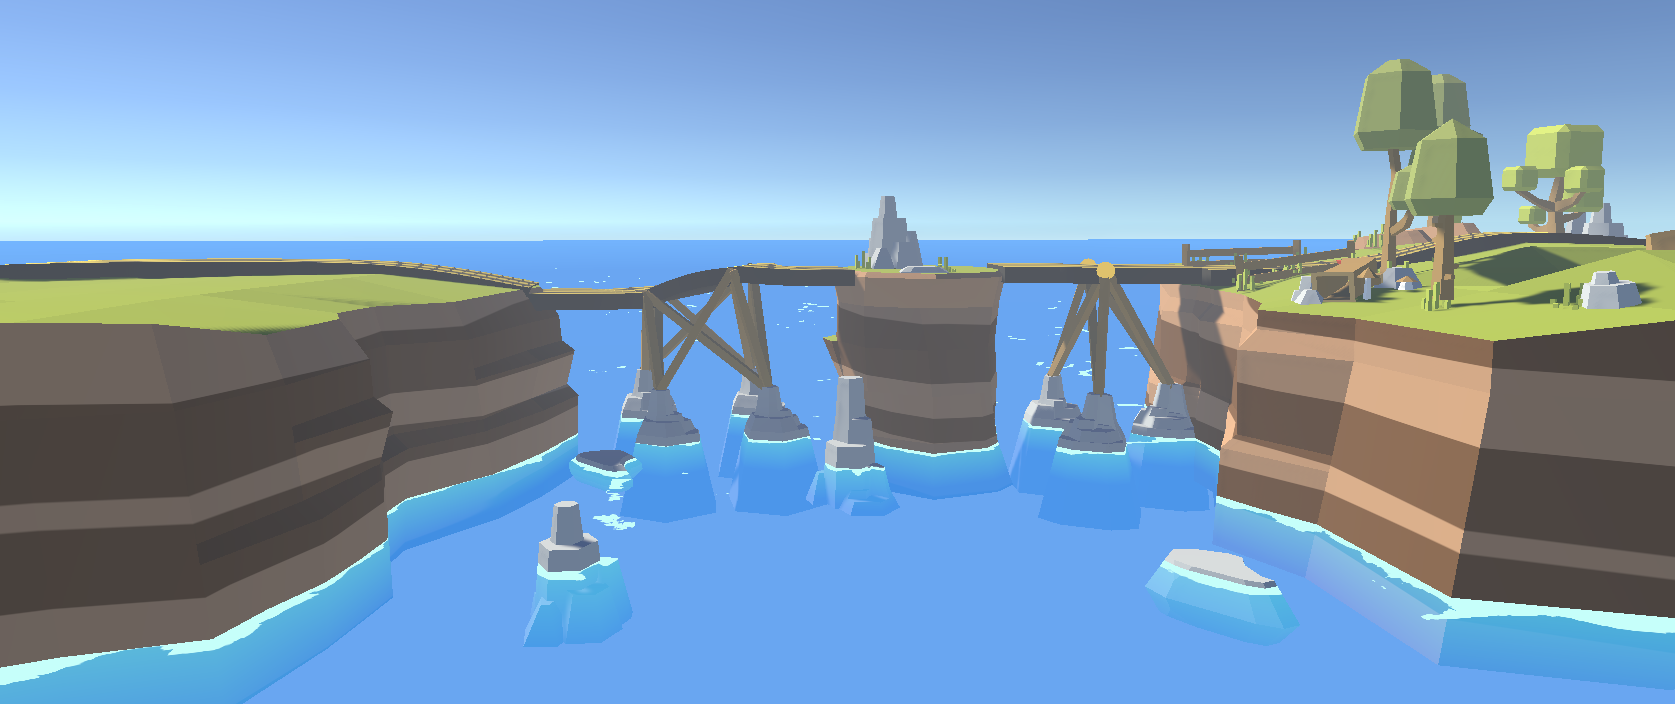 Poly Bridge 3D - proof of concept